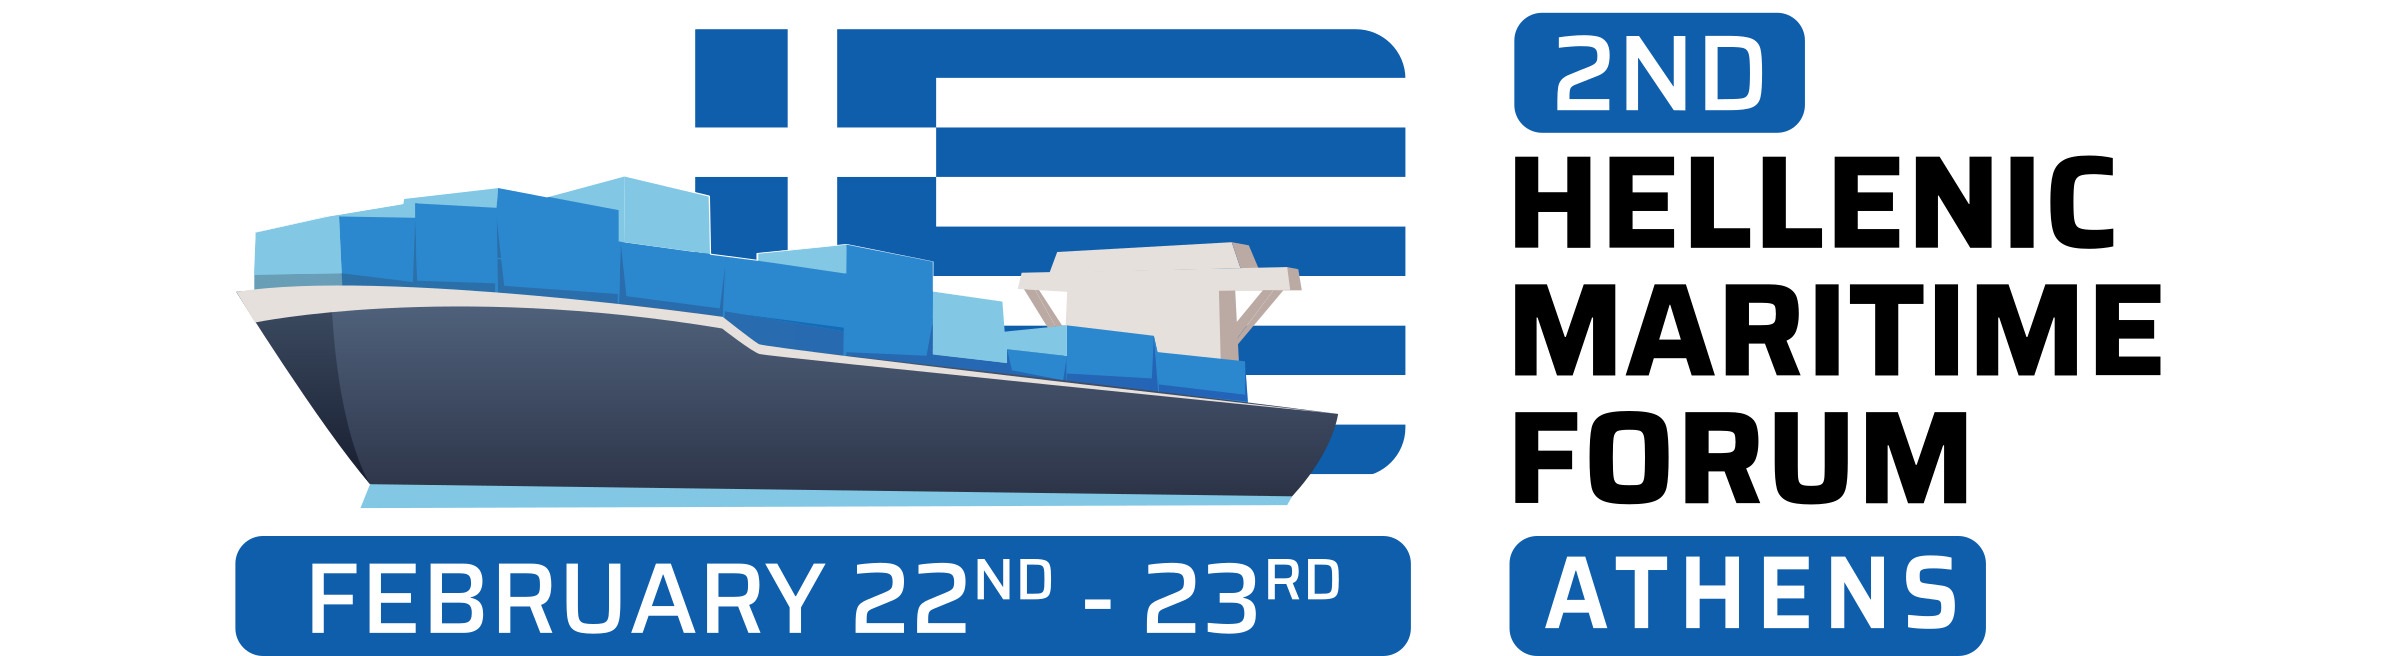 Hellenic Maritime Forum